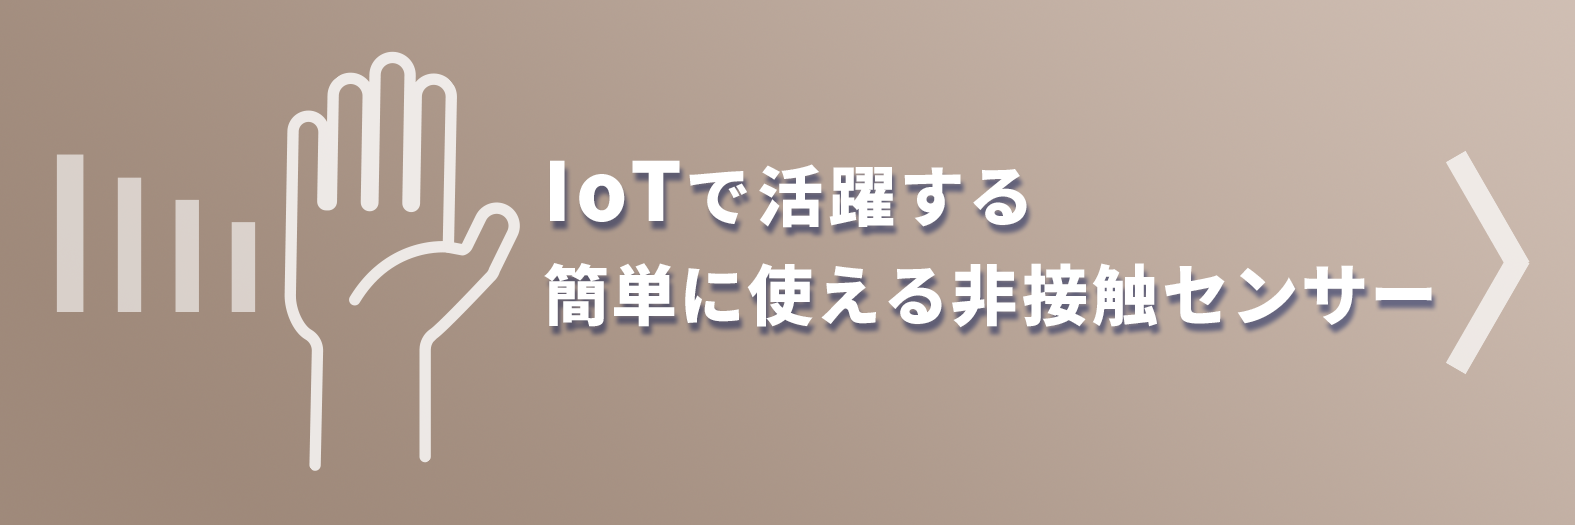 IIoTで活躍する簡単に使える非接触センサー